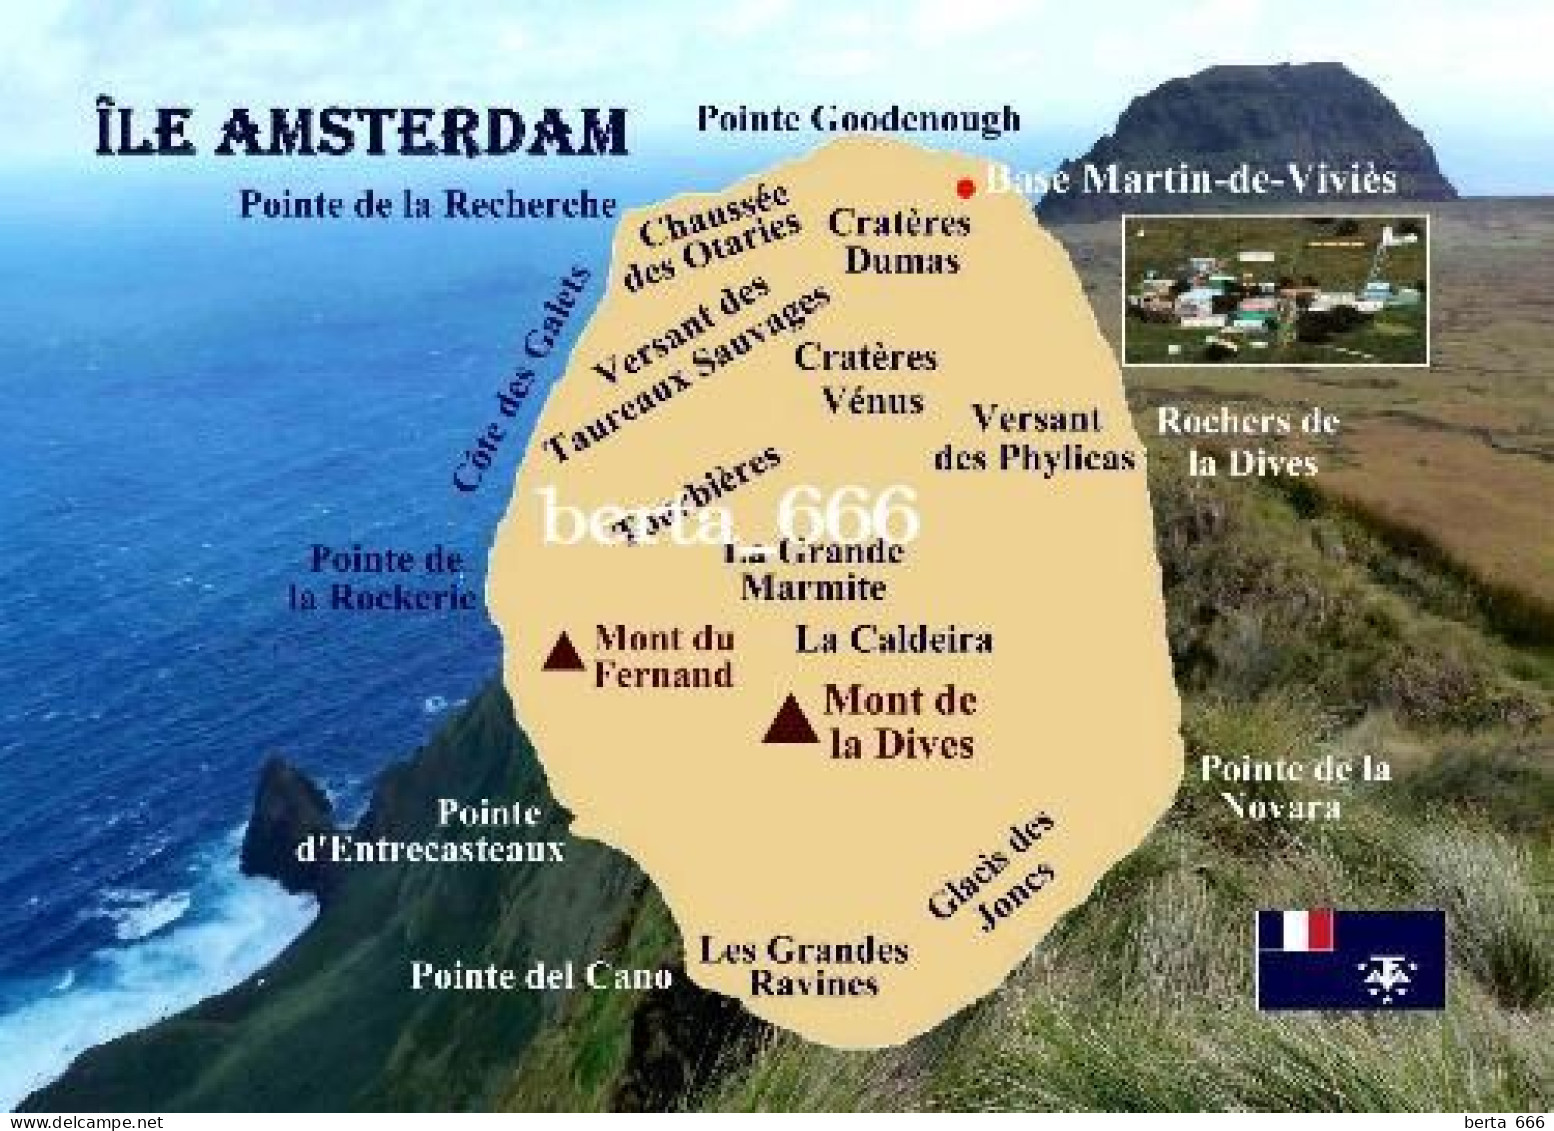 TAAF Amsterdam Island Map UNESCO New Postcard * Carte Geographique * Landkarte - TAAF : Territori Francesi Meridionali